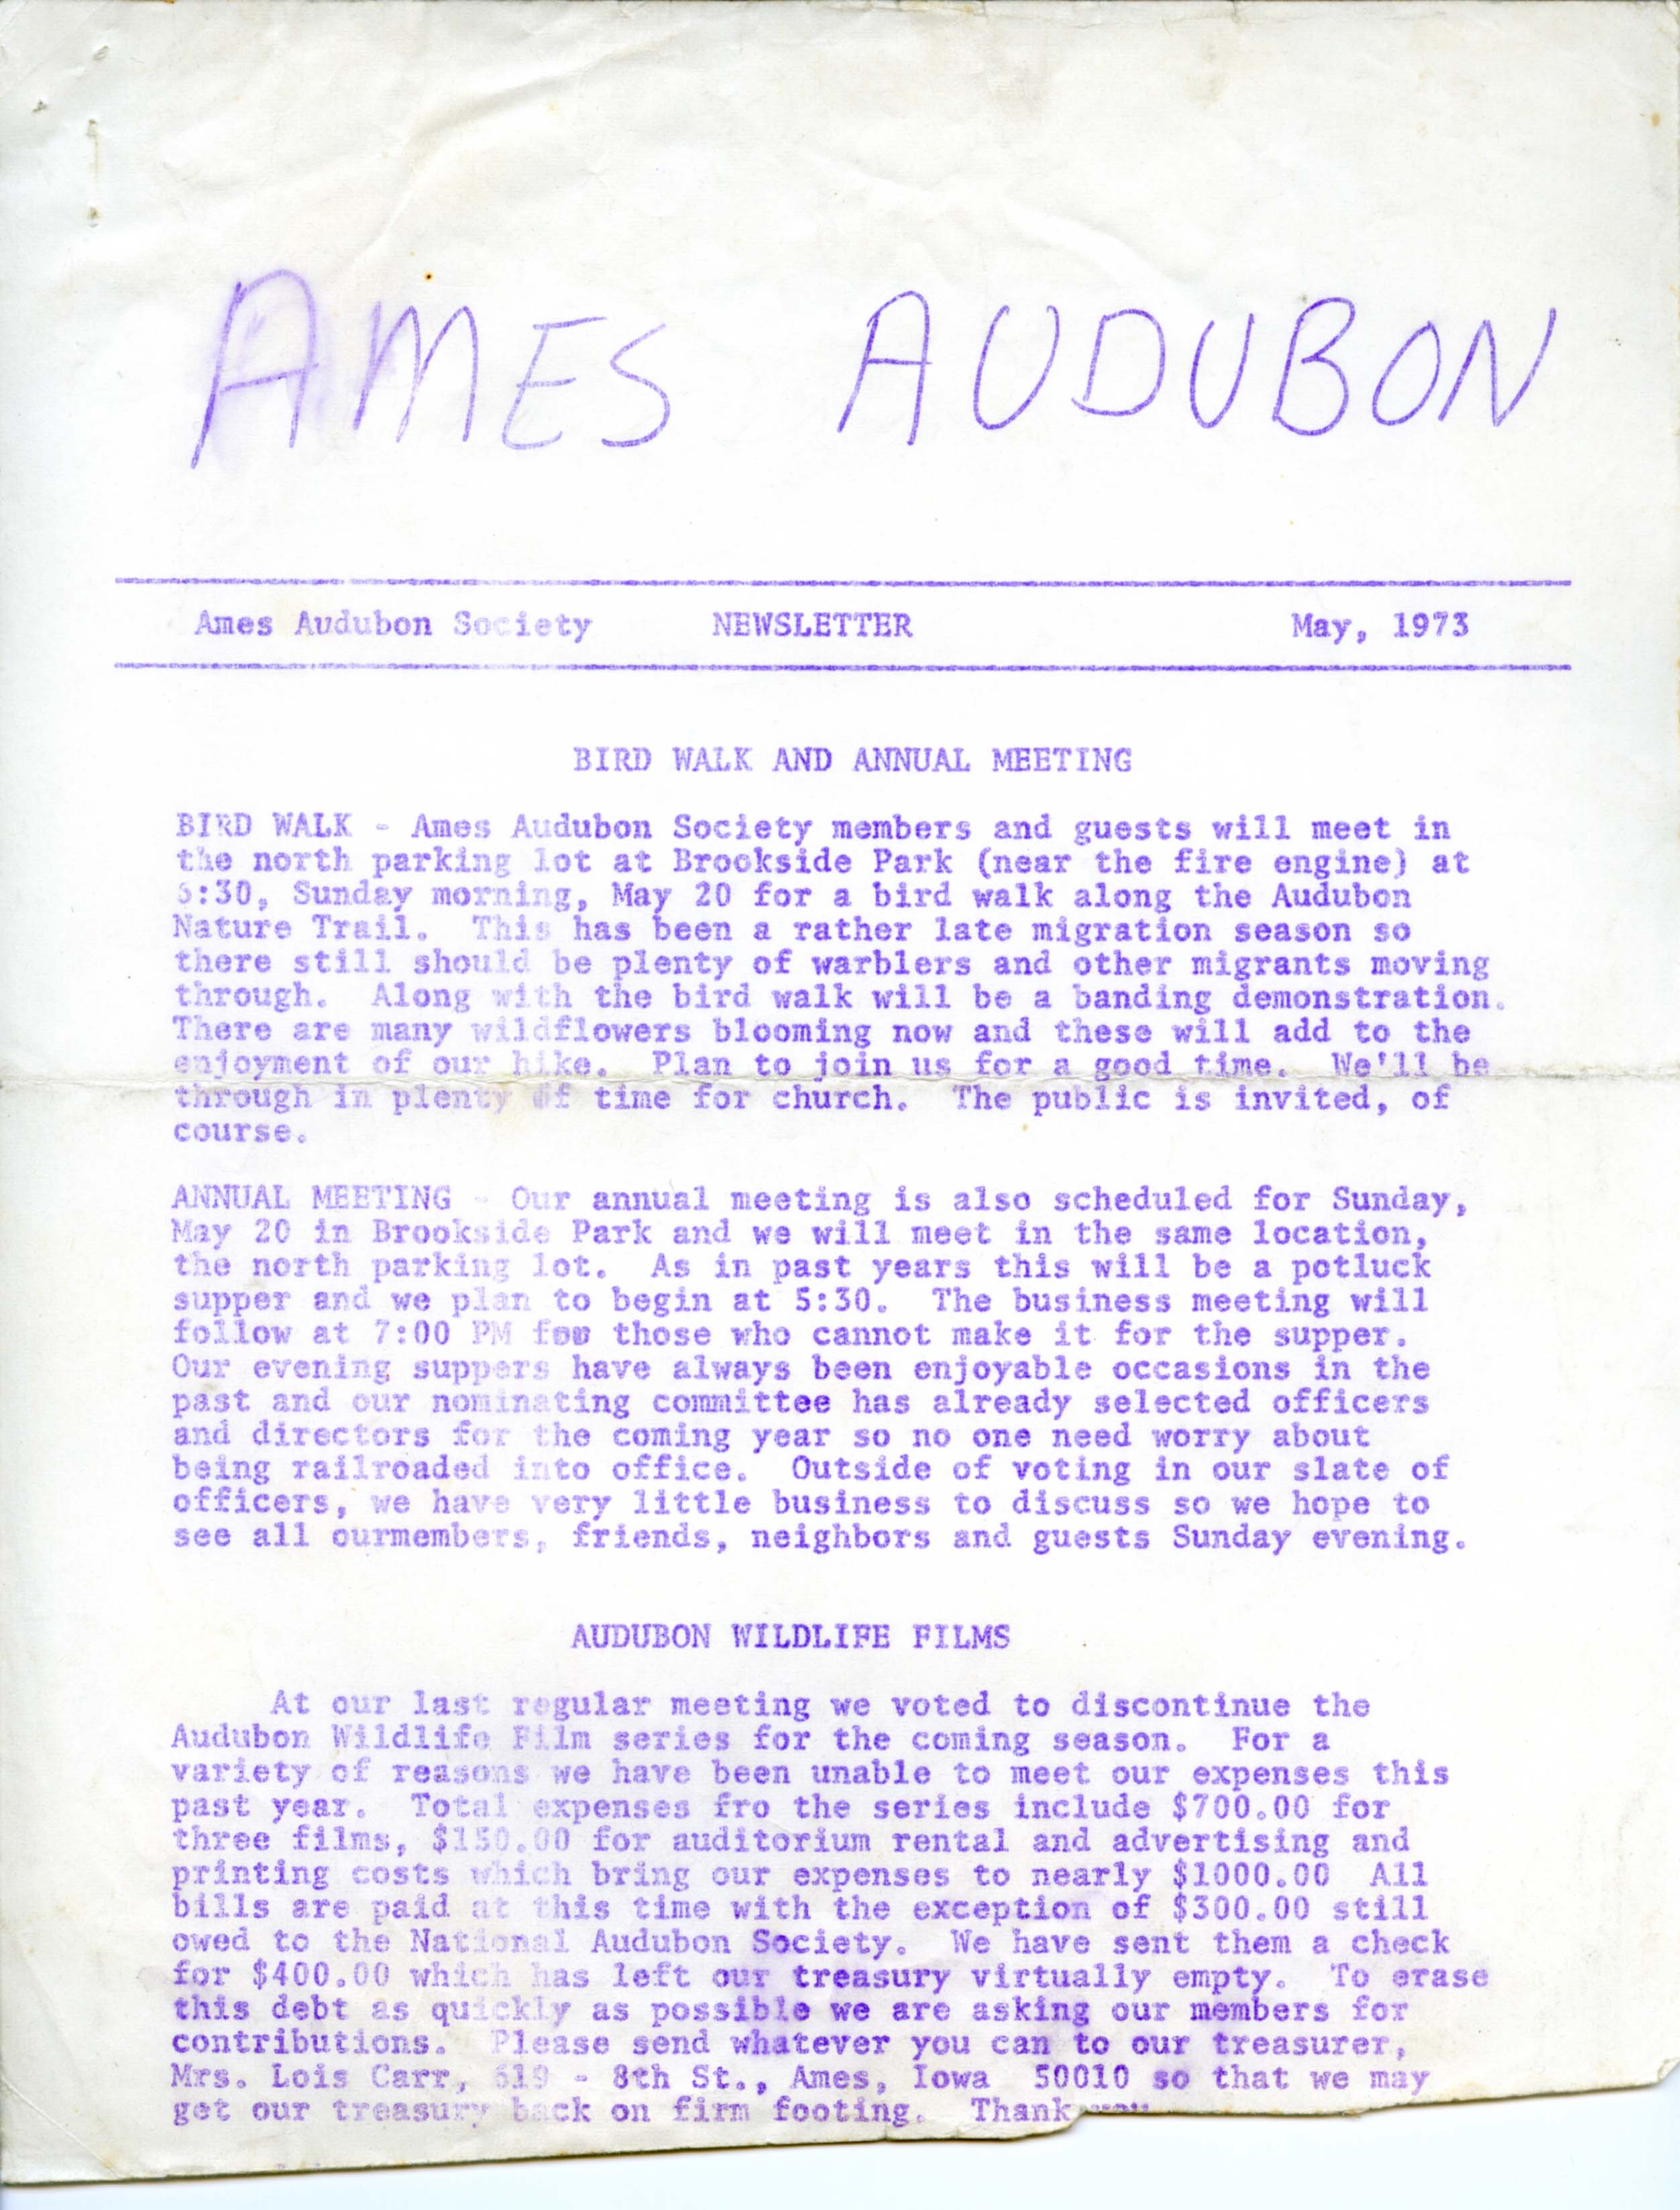 Ames Audubon Society Newsletter, May 1973